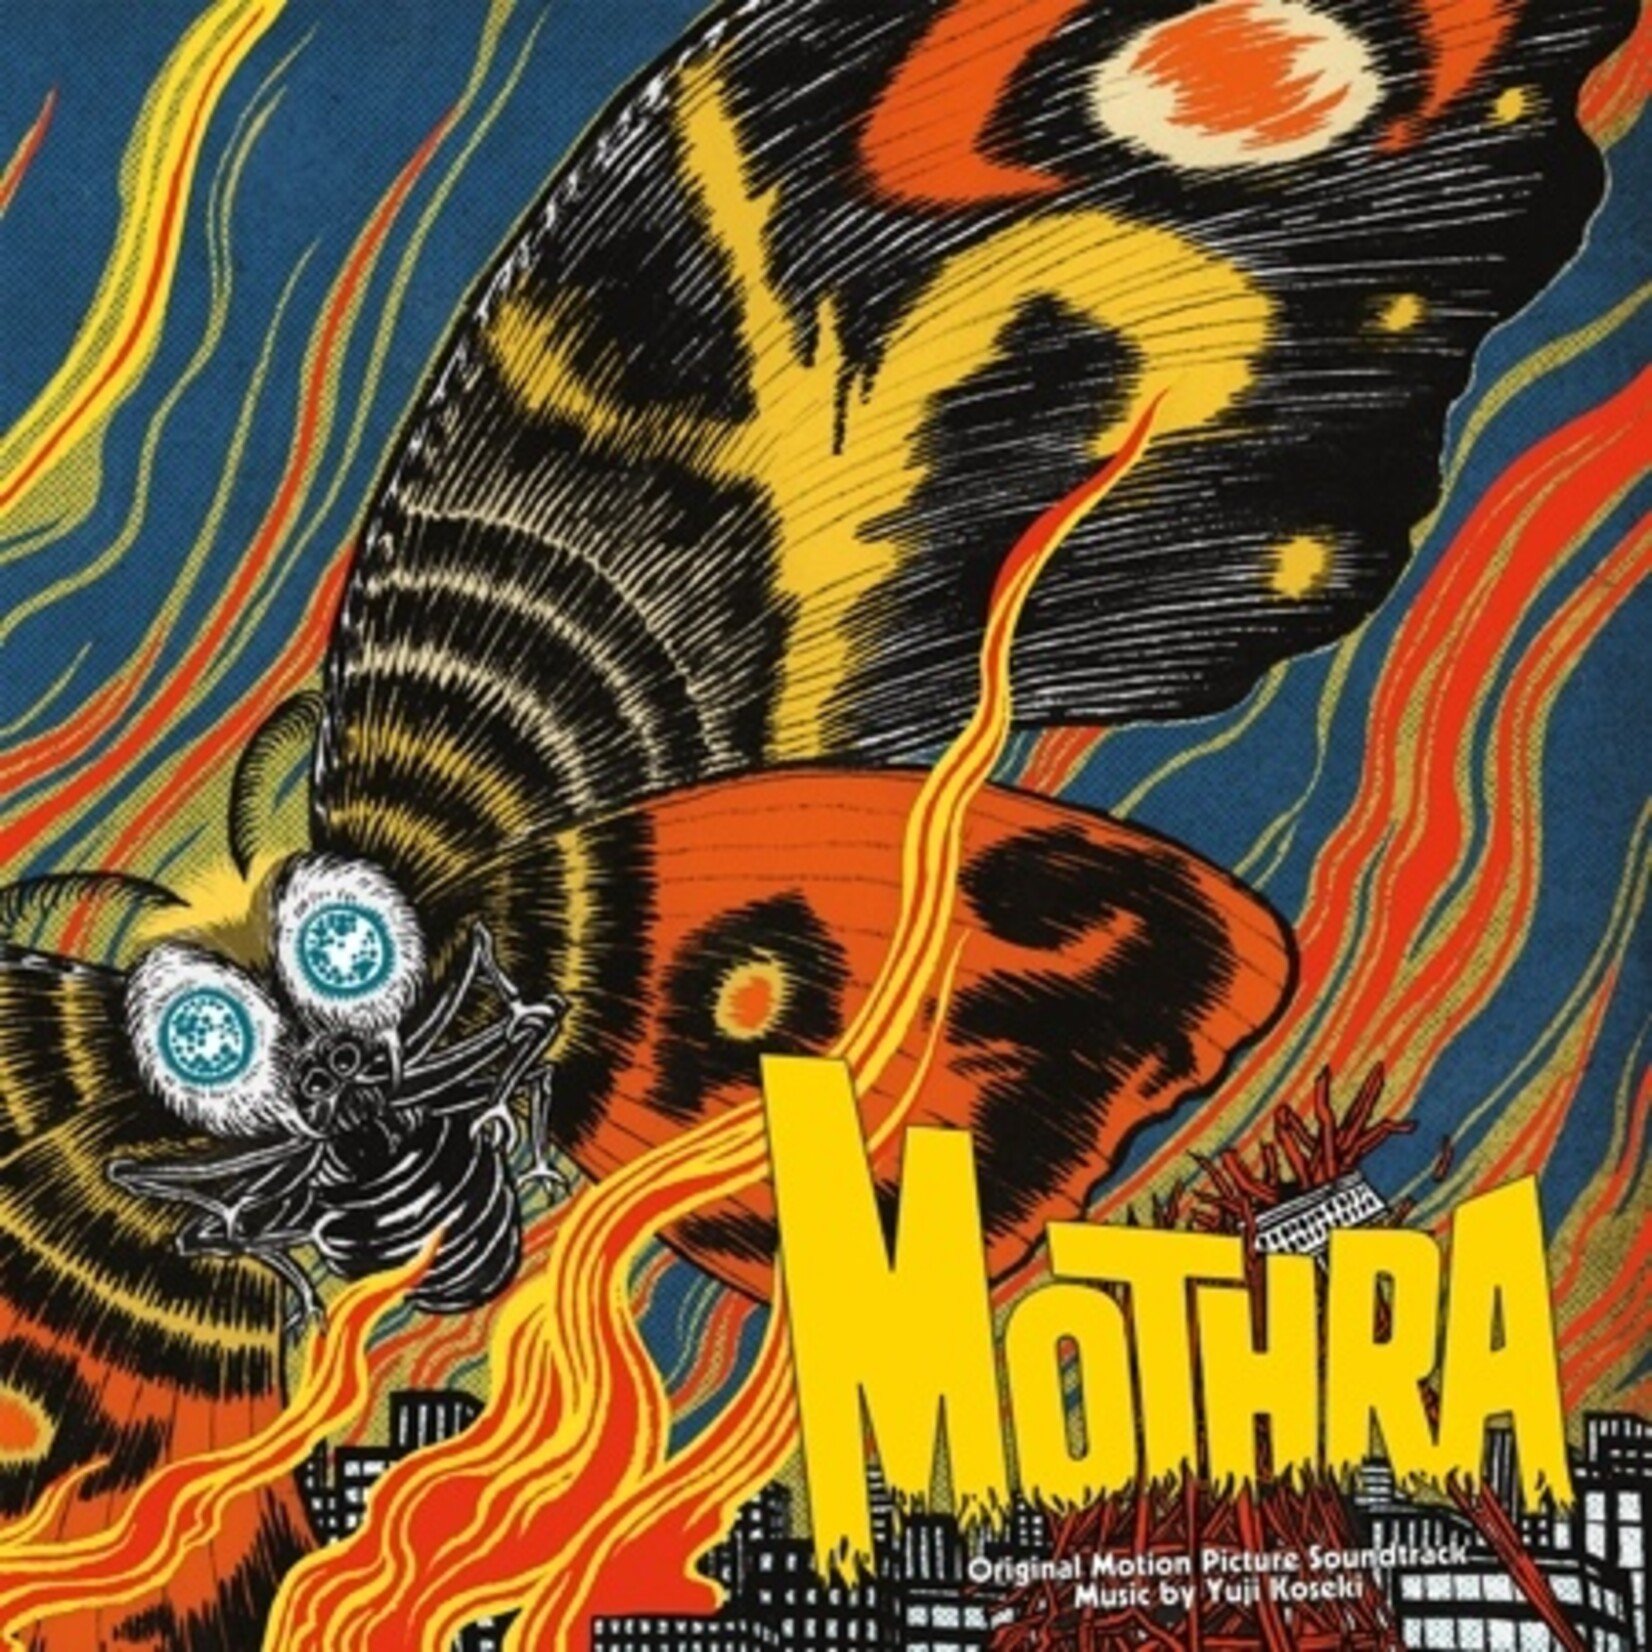 Yuji Koseki – "Mothra" Original Motion Picture Soundtrack